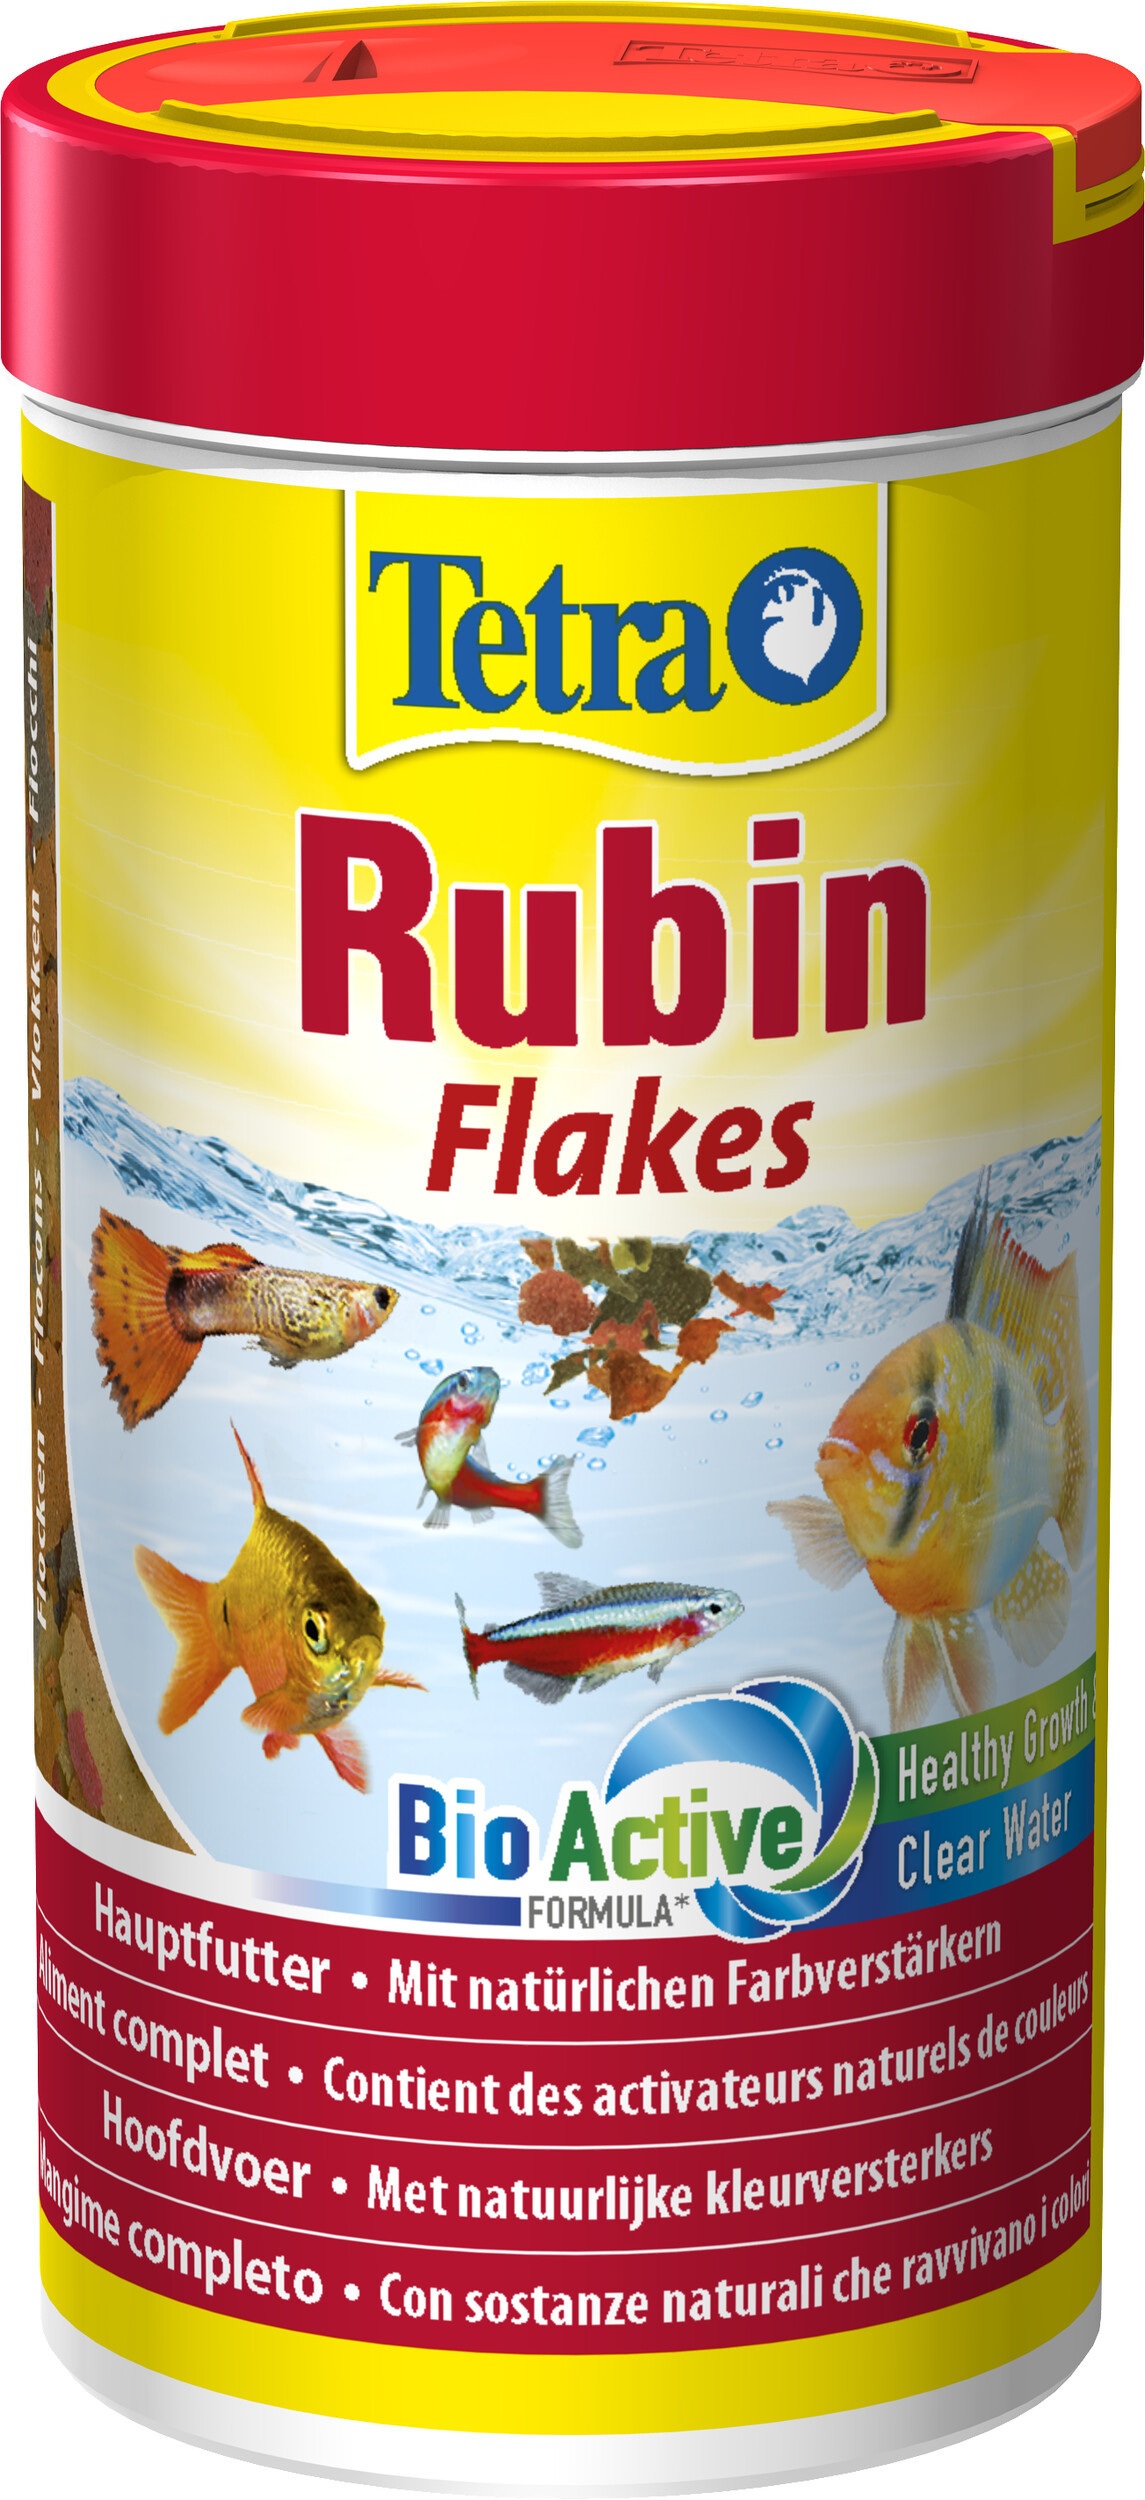 Tetra+Rubin+Flakes